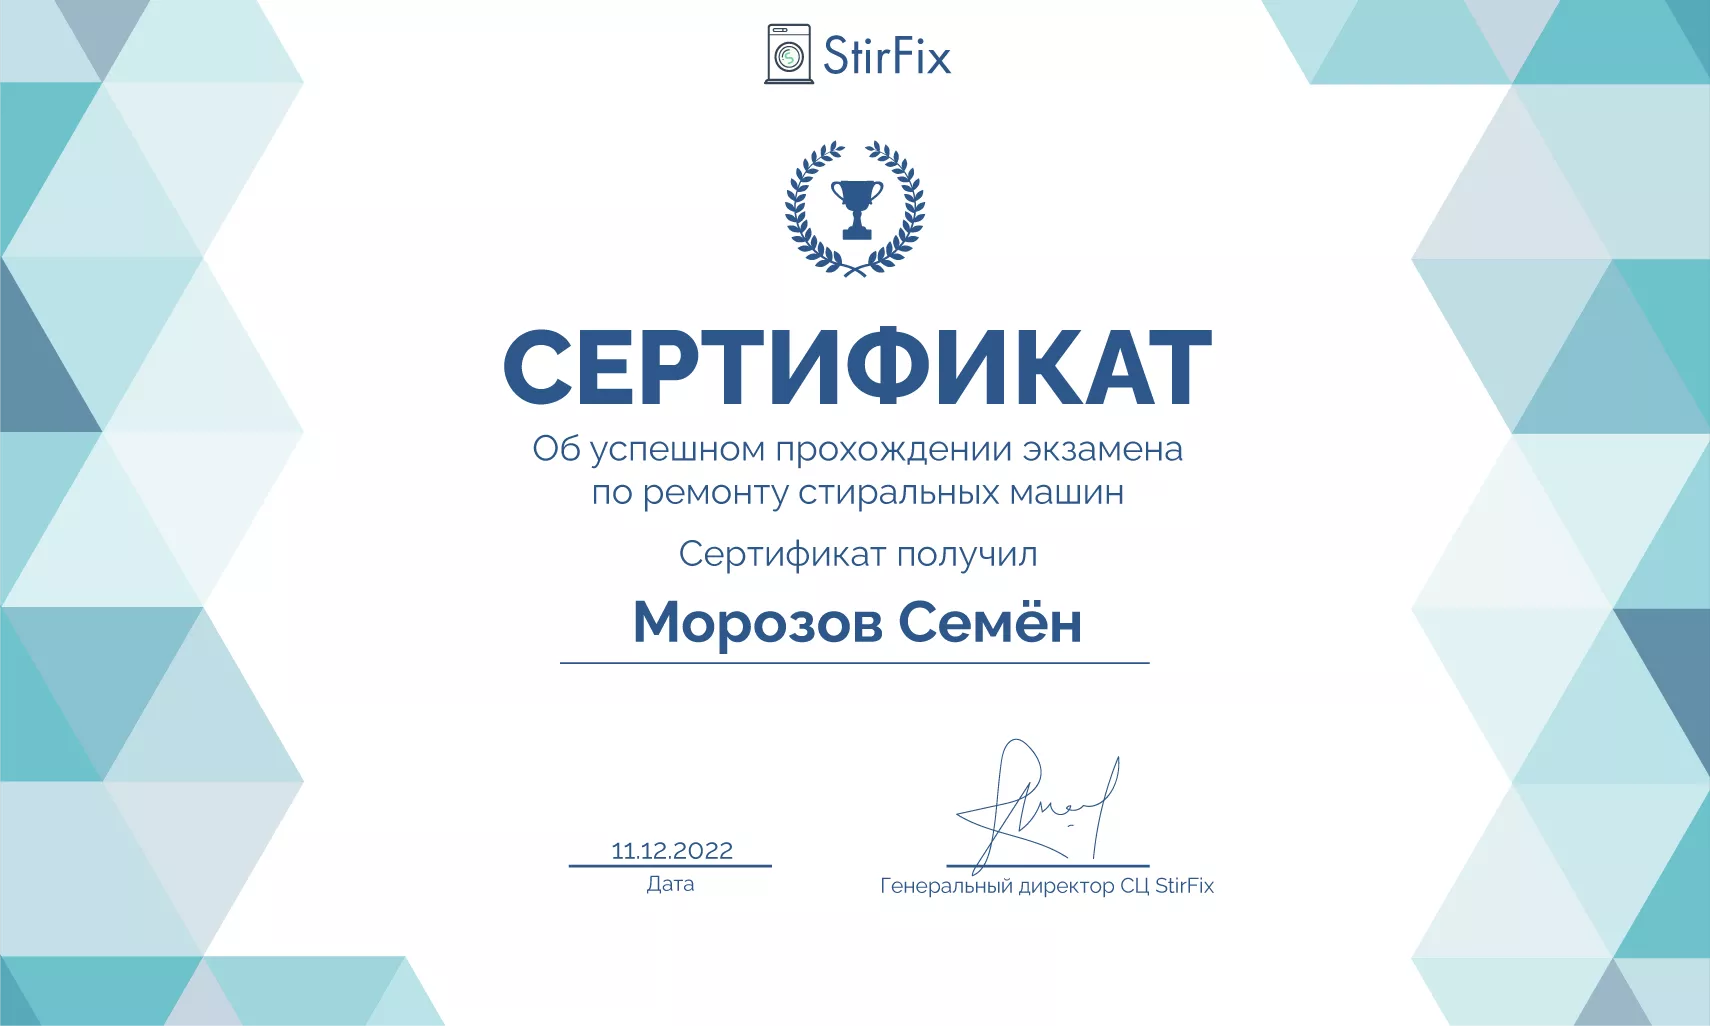 Морозов Семён сертификат телемастера